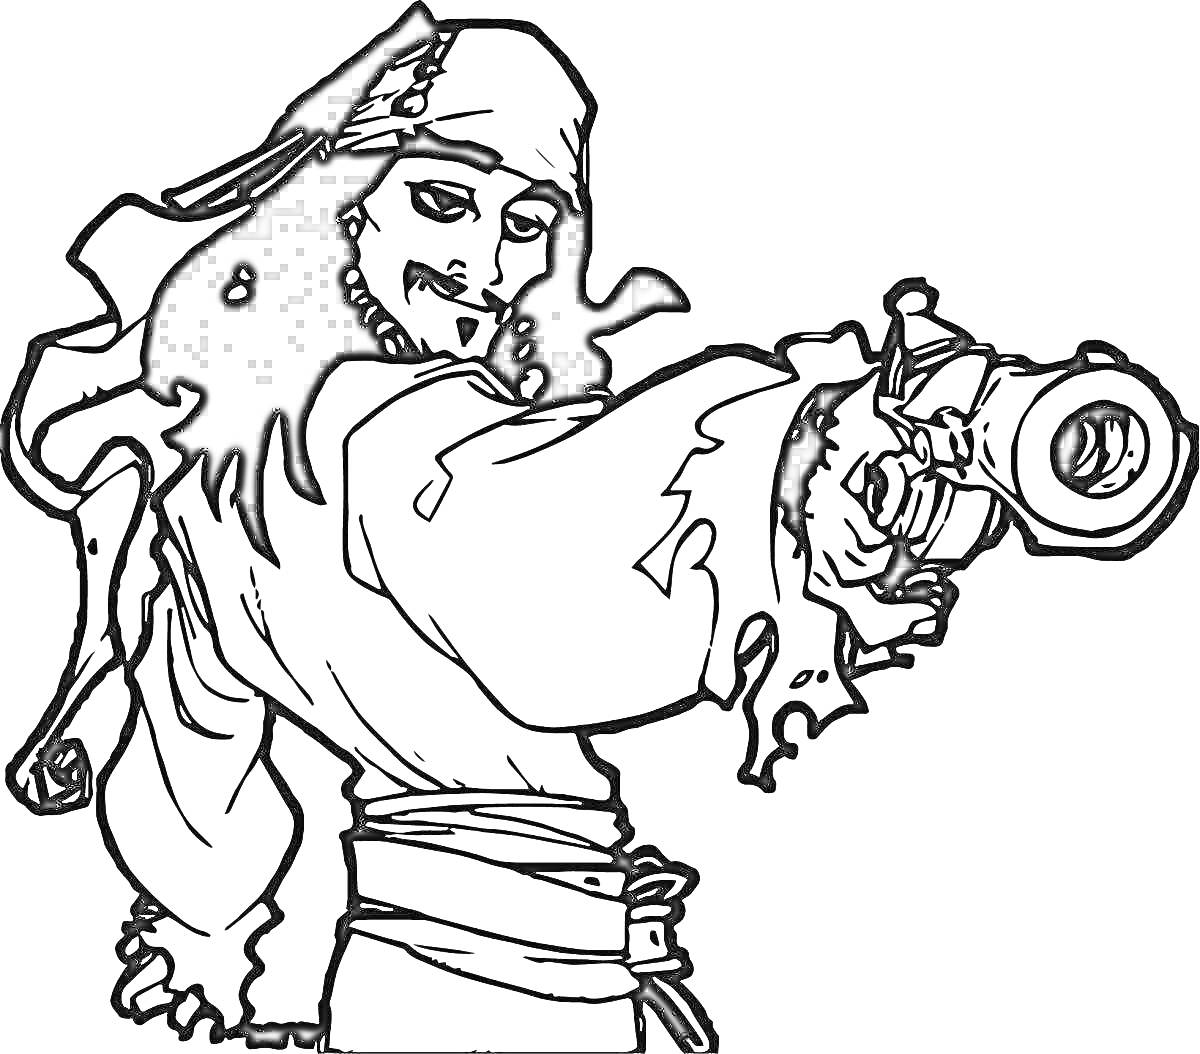 Раскраска Пират с пистолетом и повязкой на голове.